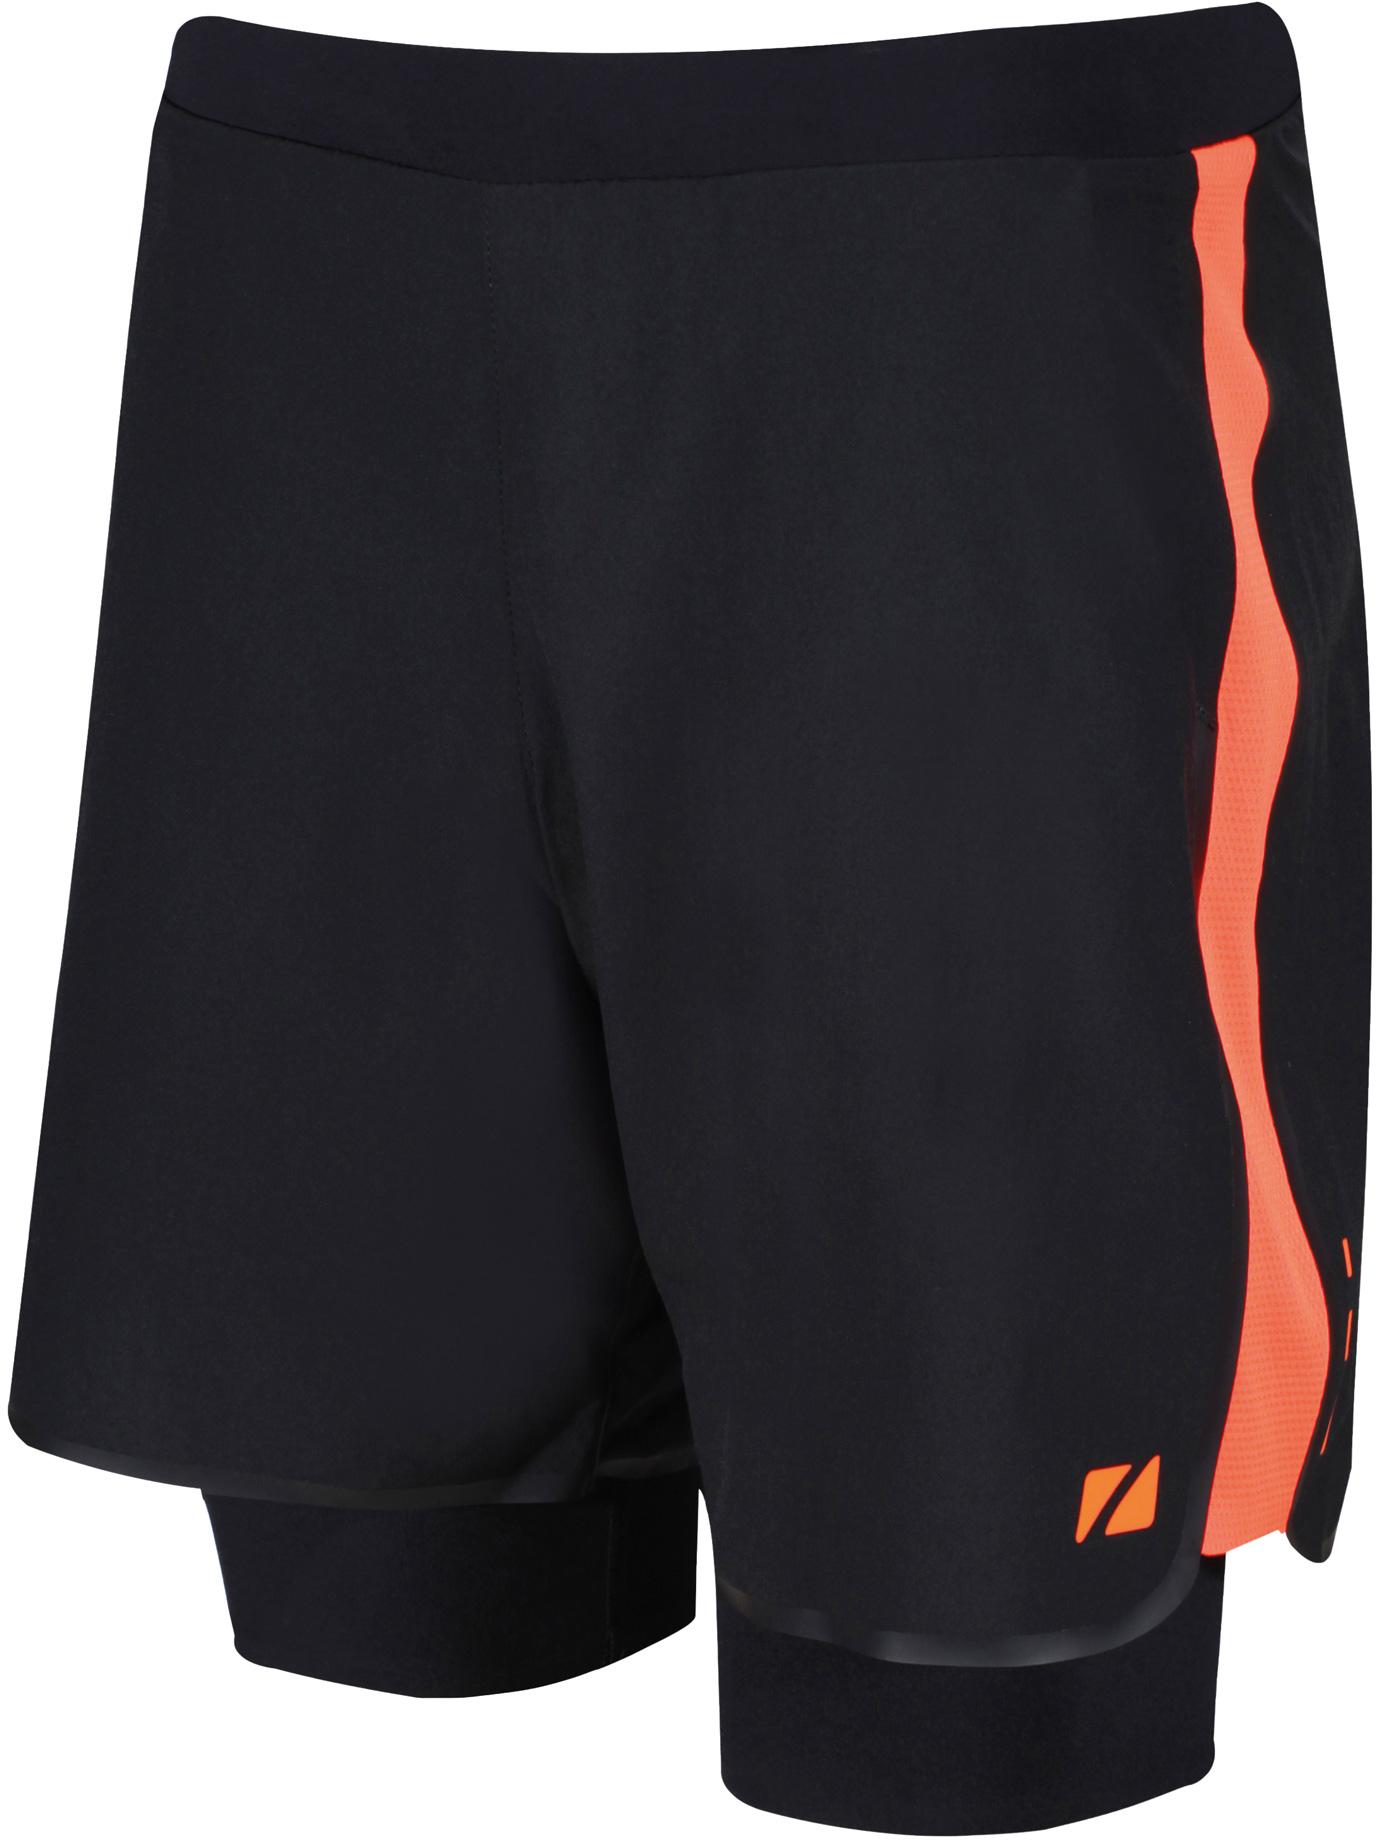 Zone3 Rx3 Medical Grade Compression 2-in-1 Shorts - Black/orange